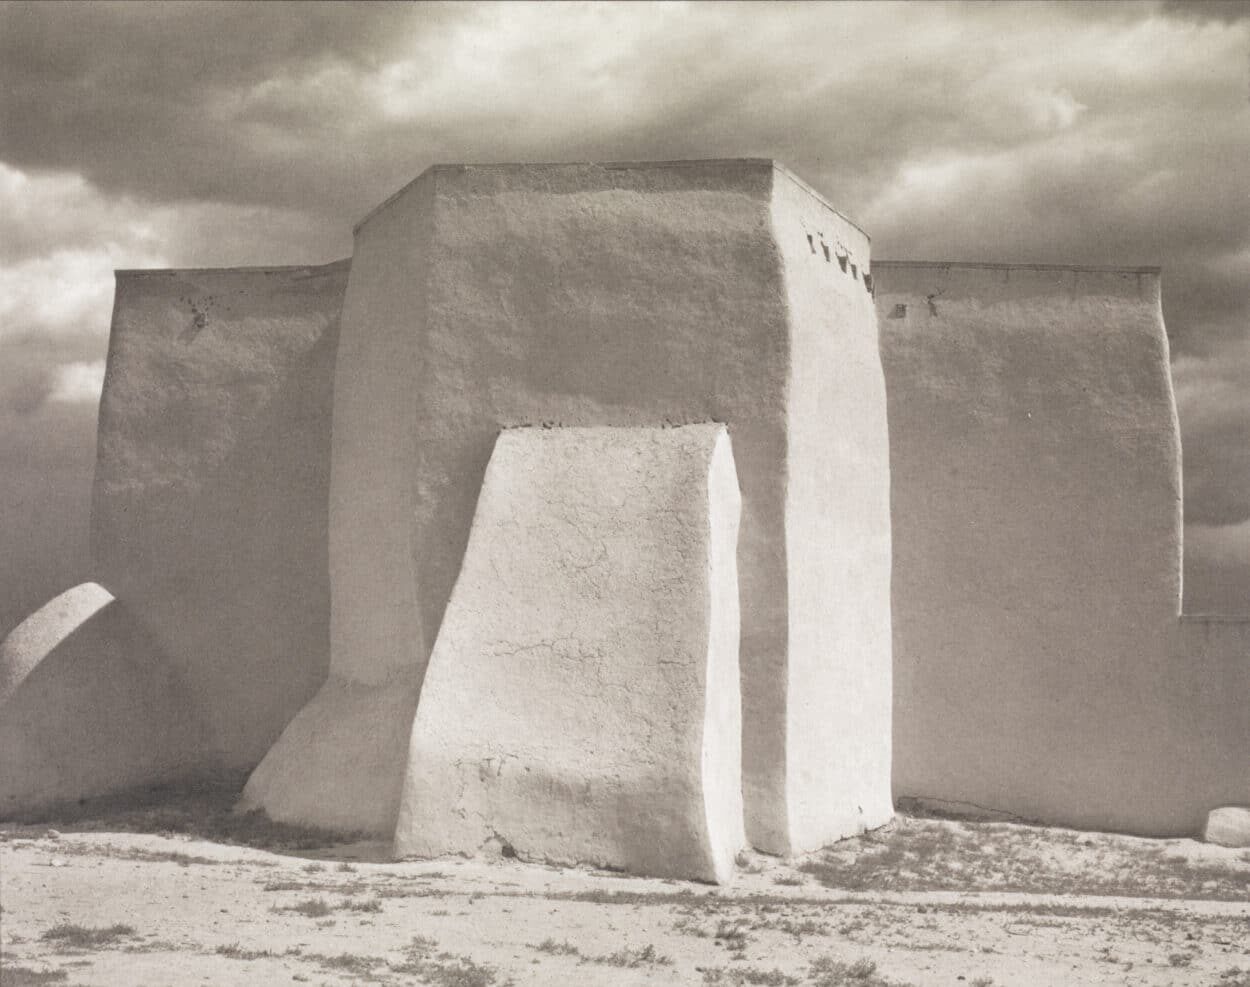 © Paul Strand, St. Francis Church, Ranchos de Taos, New Mexico, 1931 / Aperture Foundation Inc., Paul Strand Archive. Fundación MAPFRE Collections